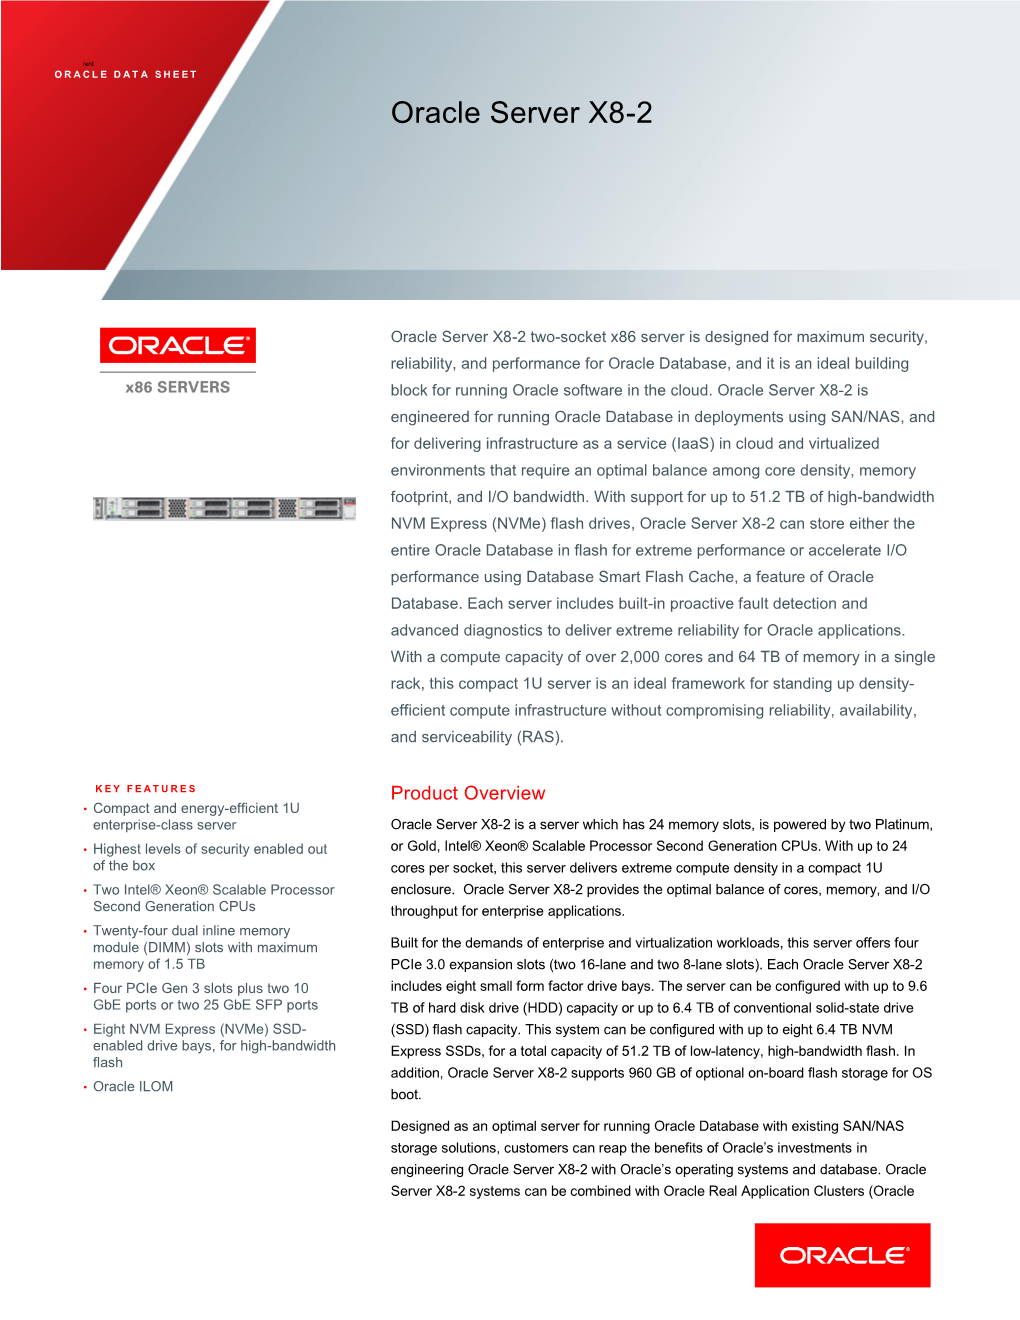 Oracle Server X8-2 Data Sheet